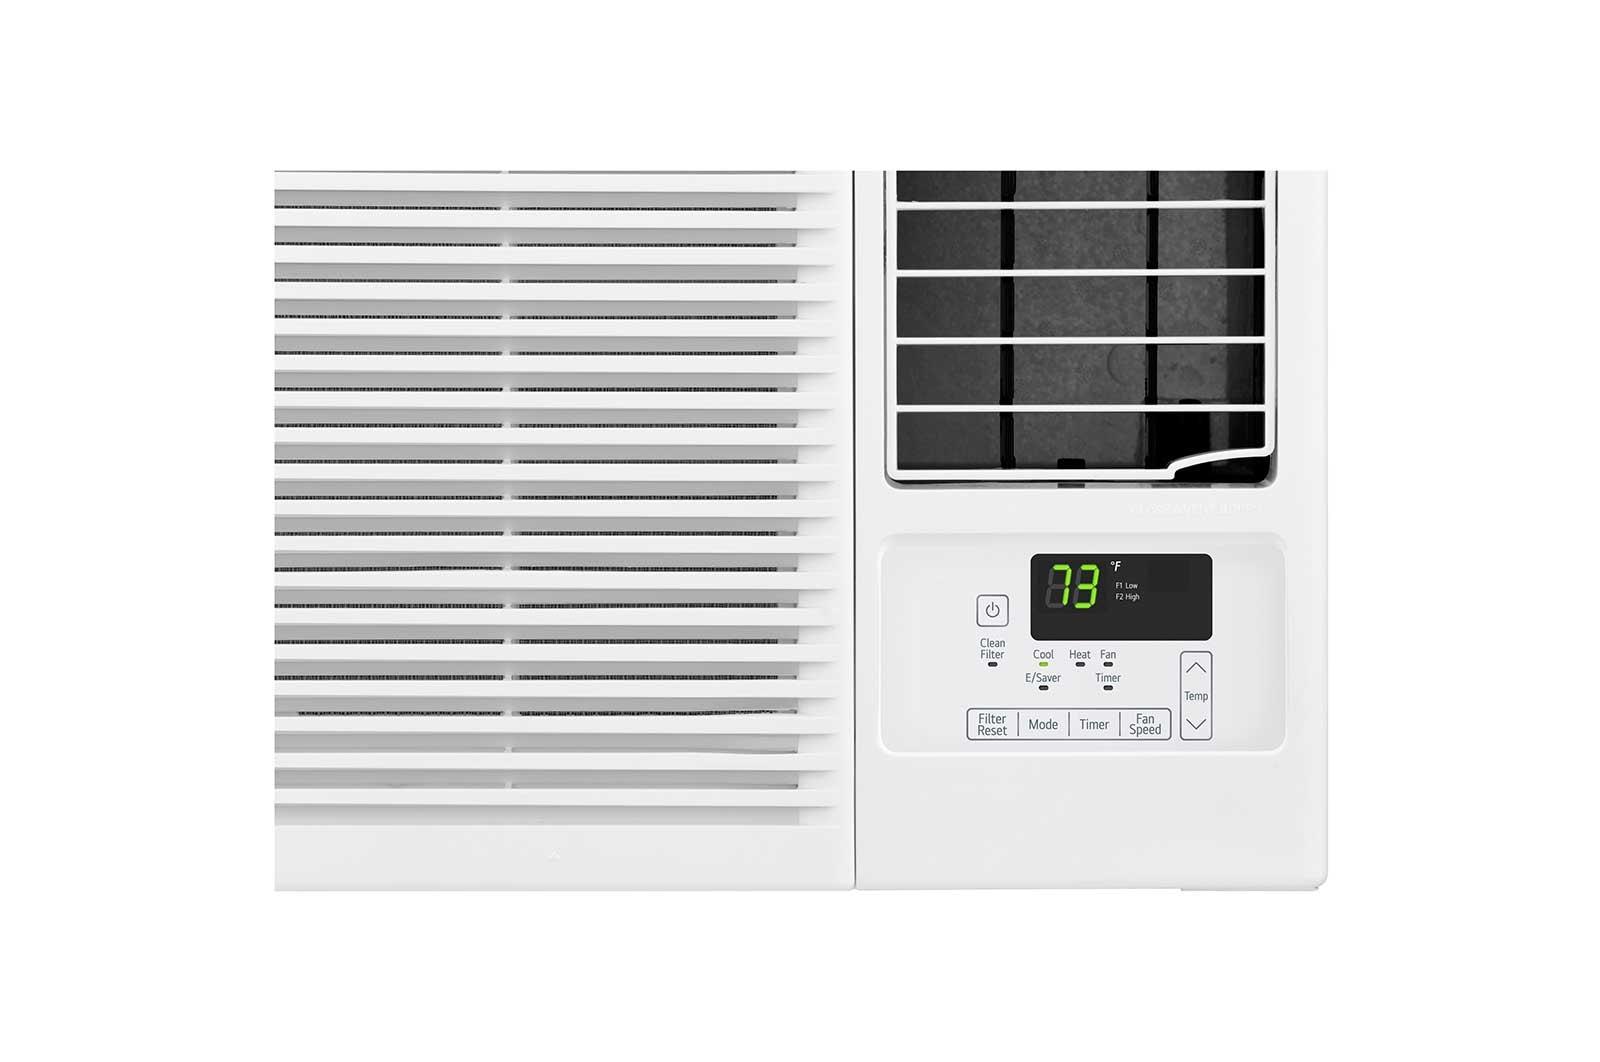 12,000 BTU Window Air Conditioner, Cooling & Heating